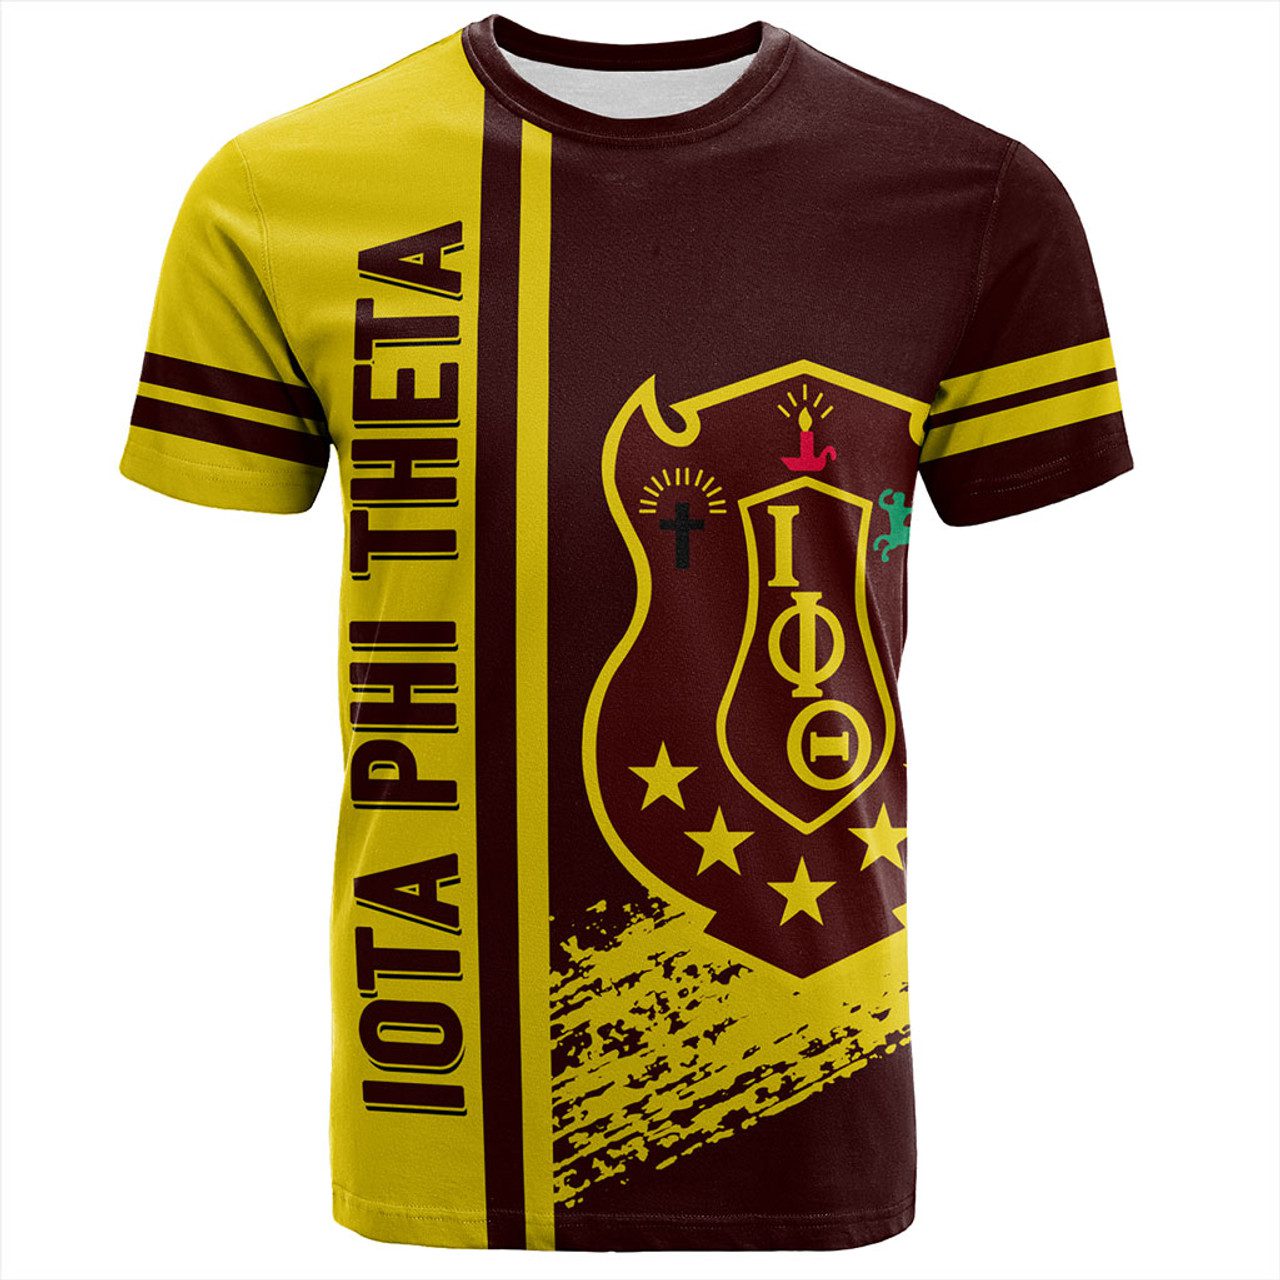 Iota Phi Theta T-Shirt Quater Style